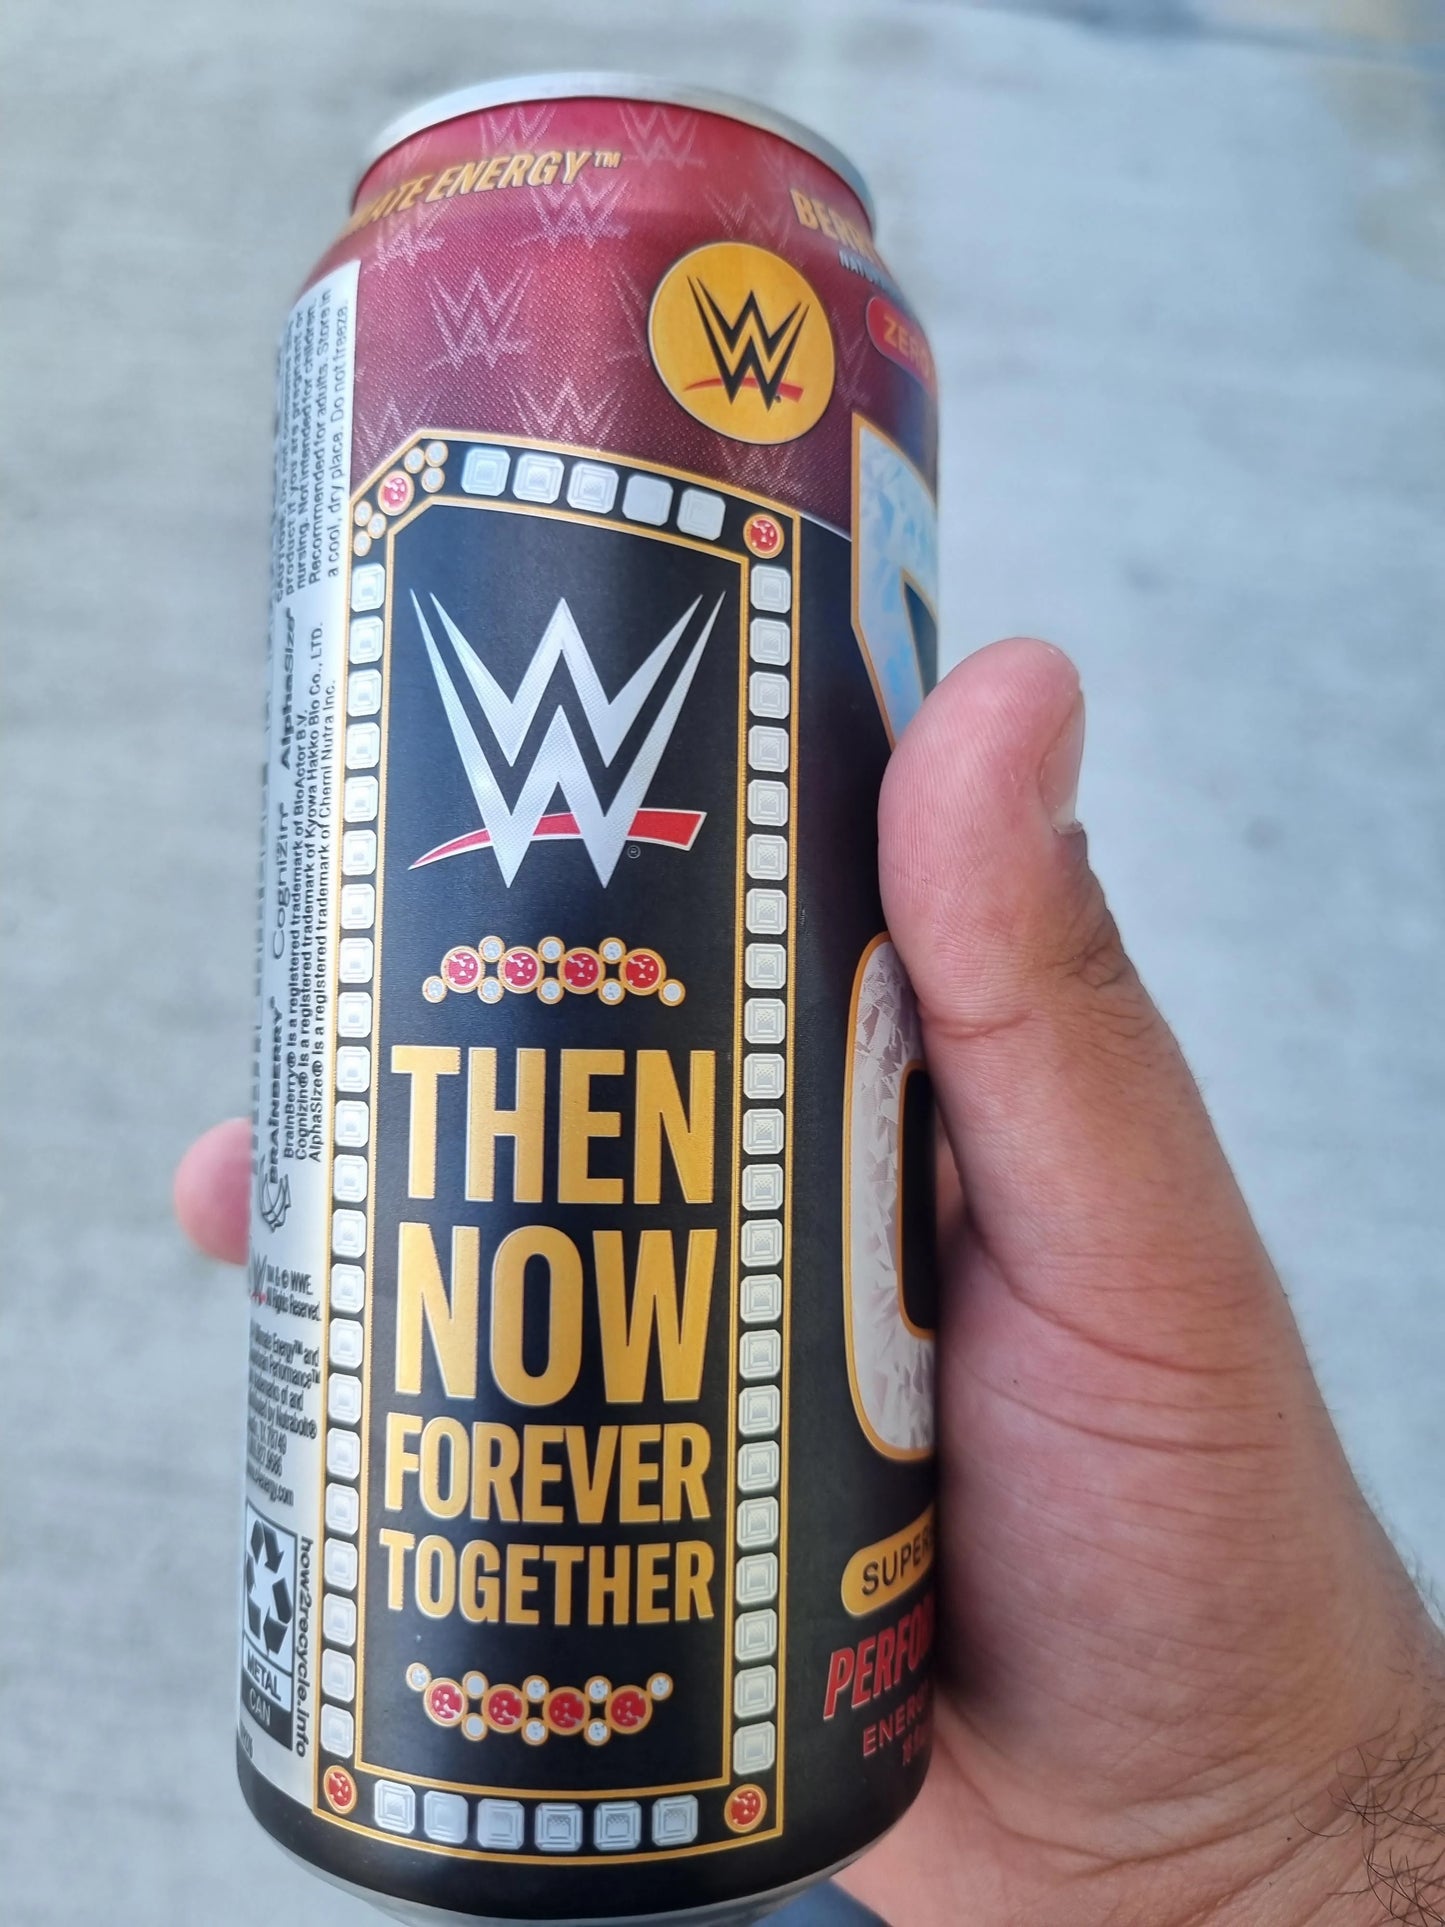 C4 Ultimate  WWE  Energy Drink Berry Powerbomb